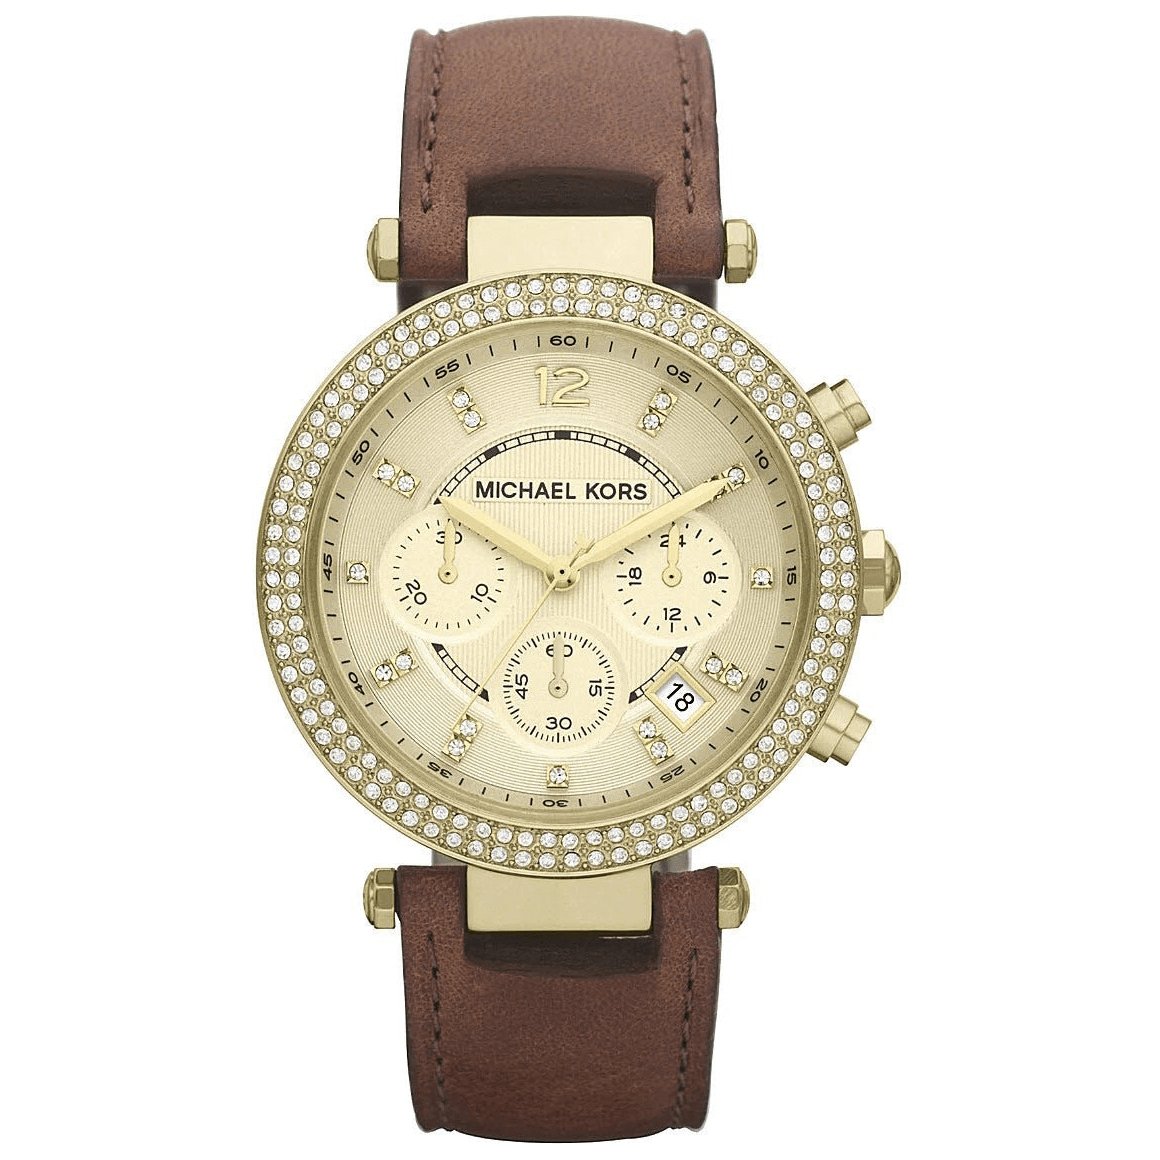 Michael Kors Leather White Original Watch Strap MK2281